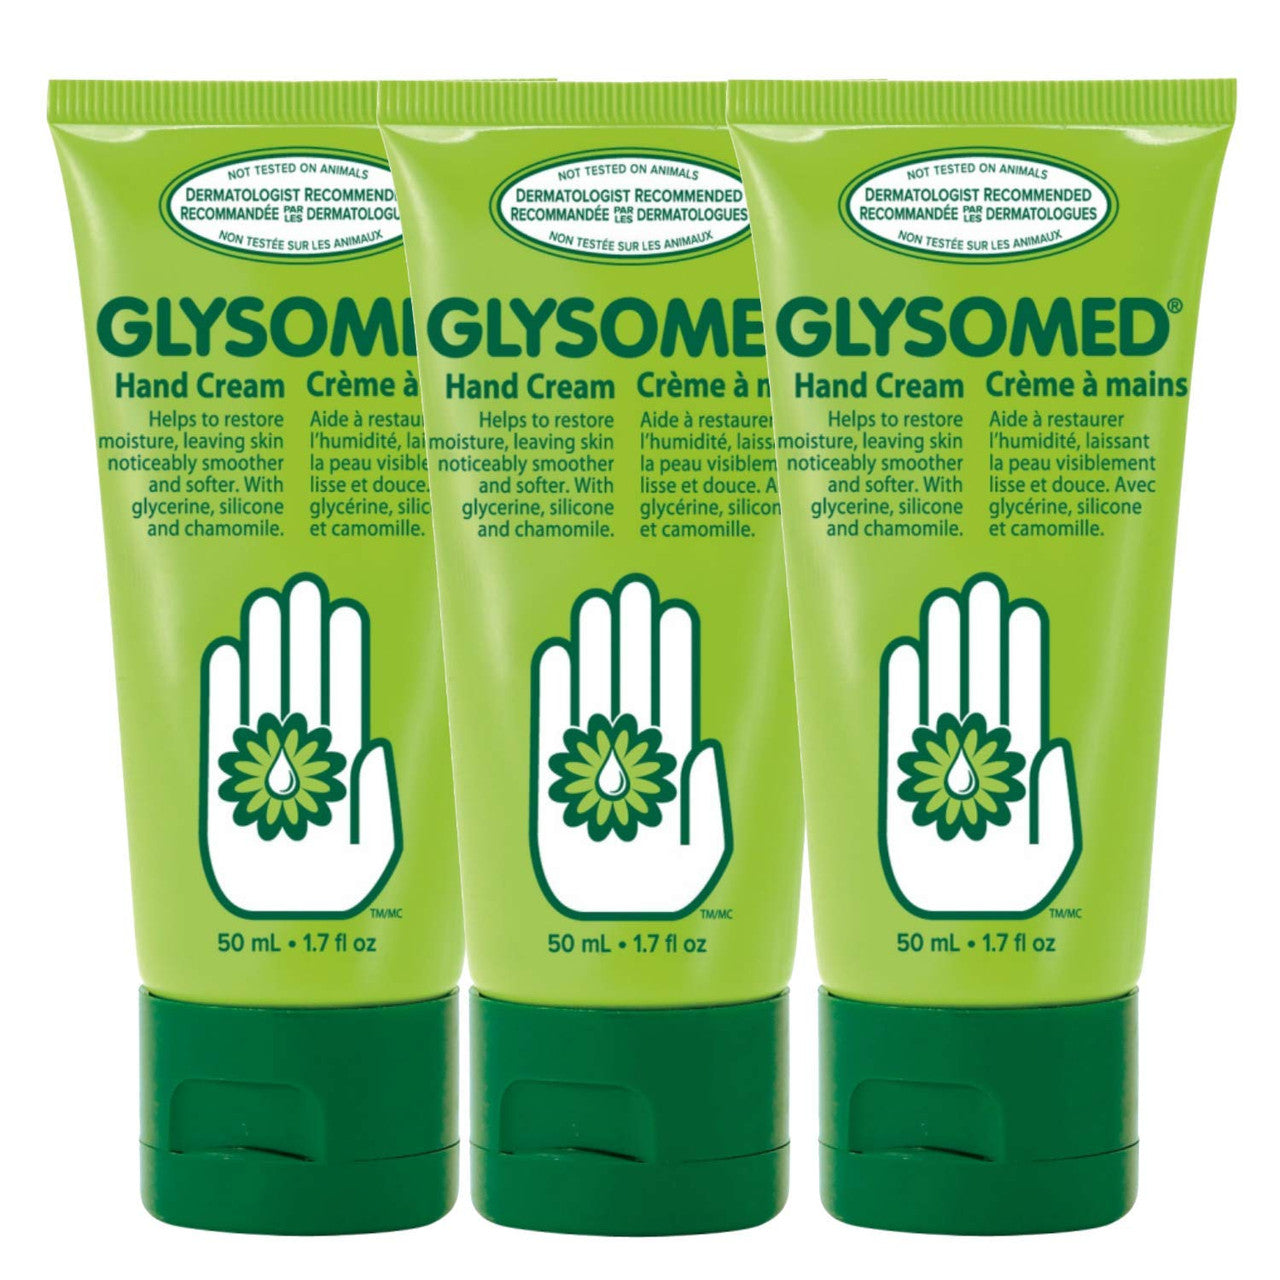 Glysomed Hand Cream Trio Pack (3 x Glysomed Hand Cream Mini Travel Size Tube 50mL / 1.7 fl oz)